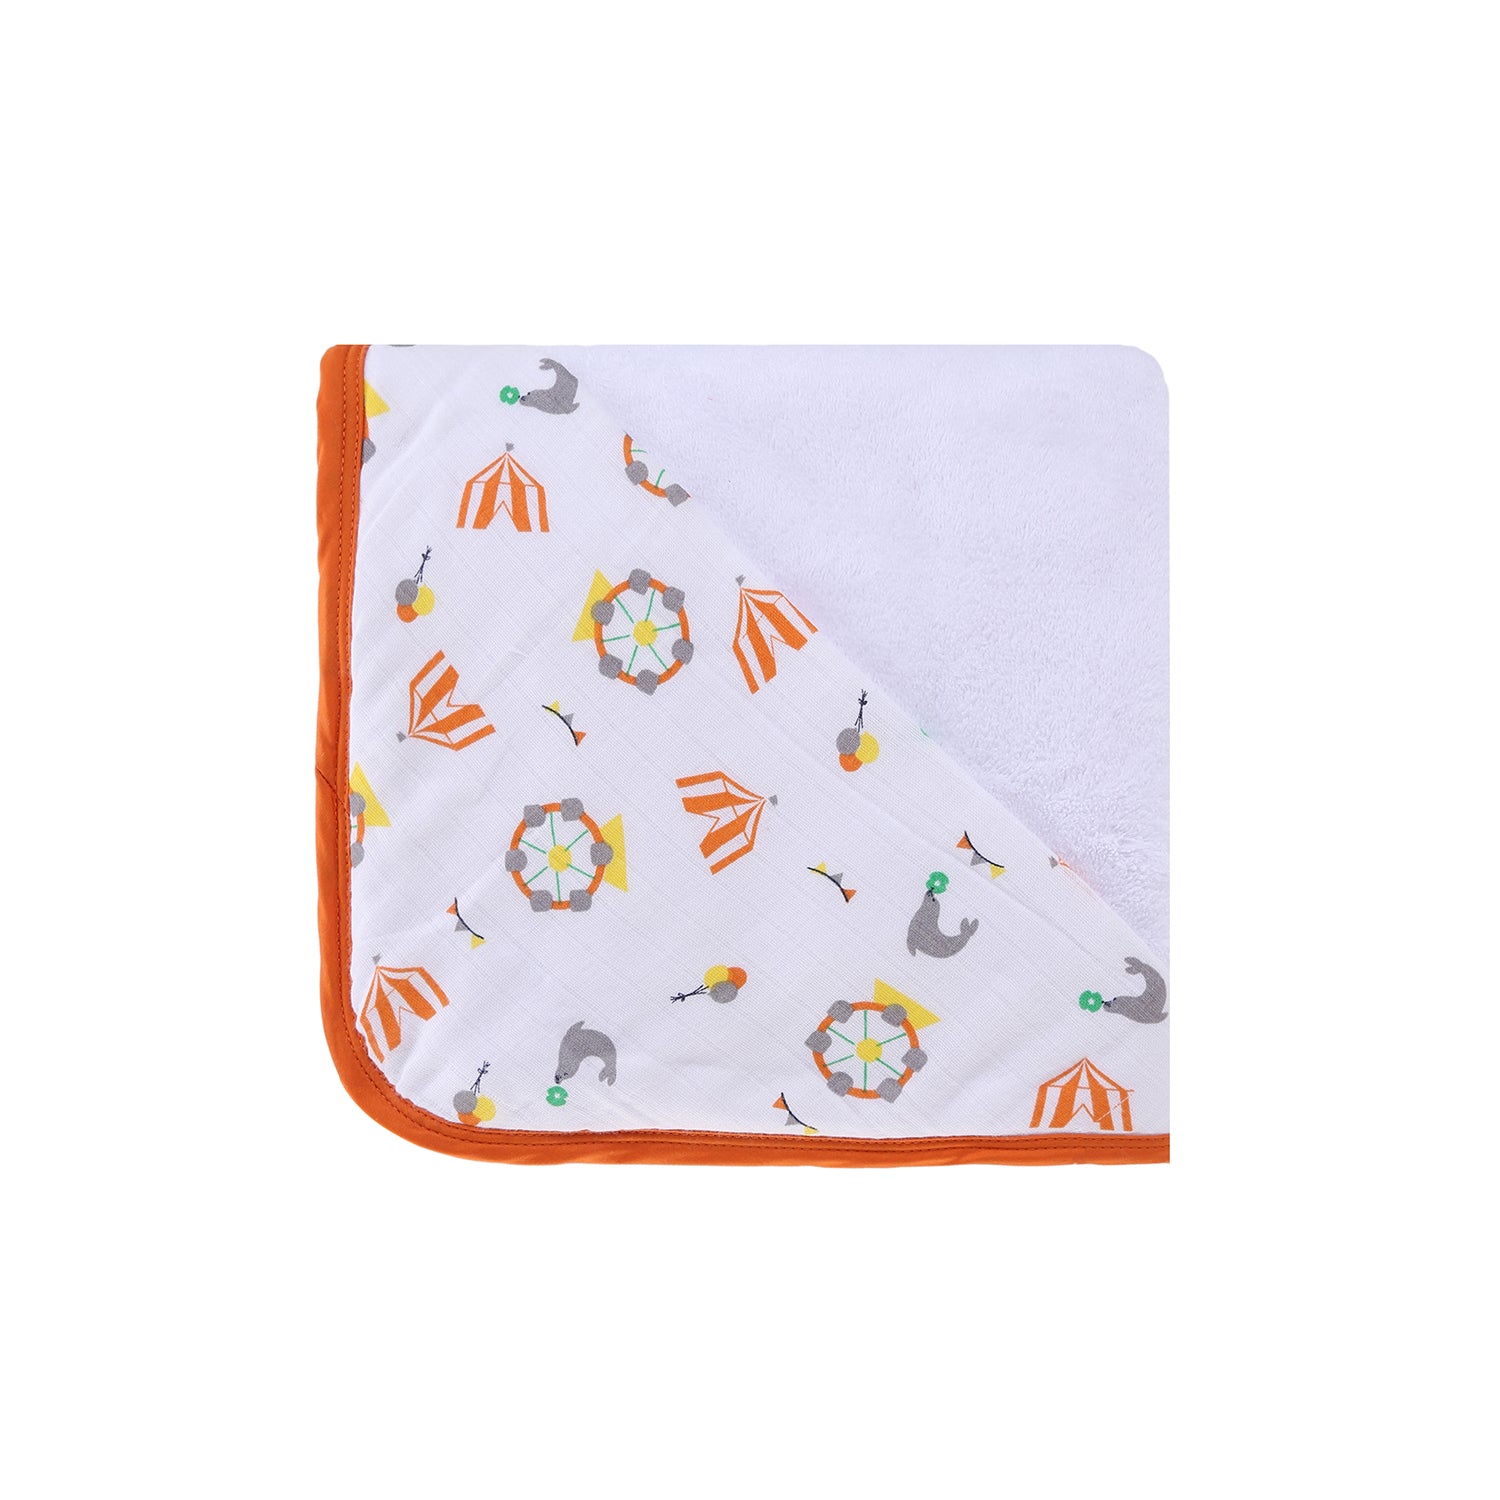 Infant Hooded Towel Wrap - Carnival White/Orange